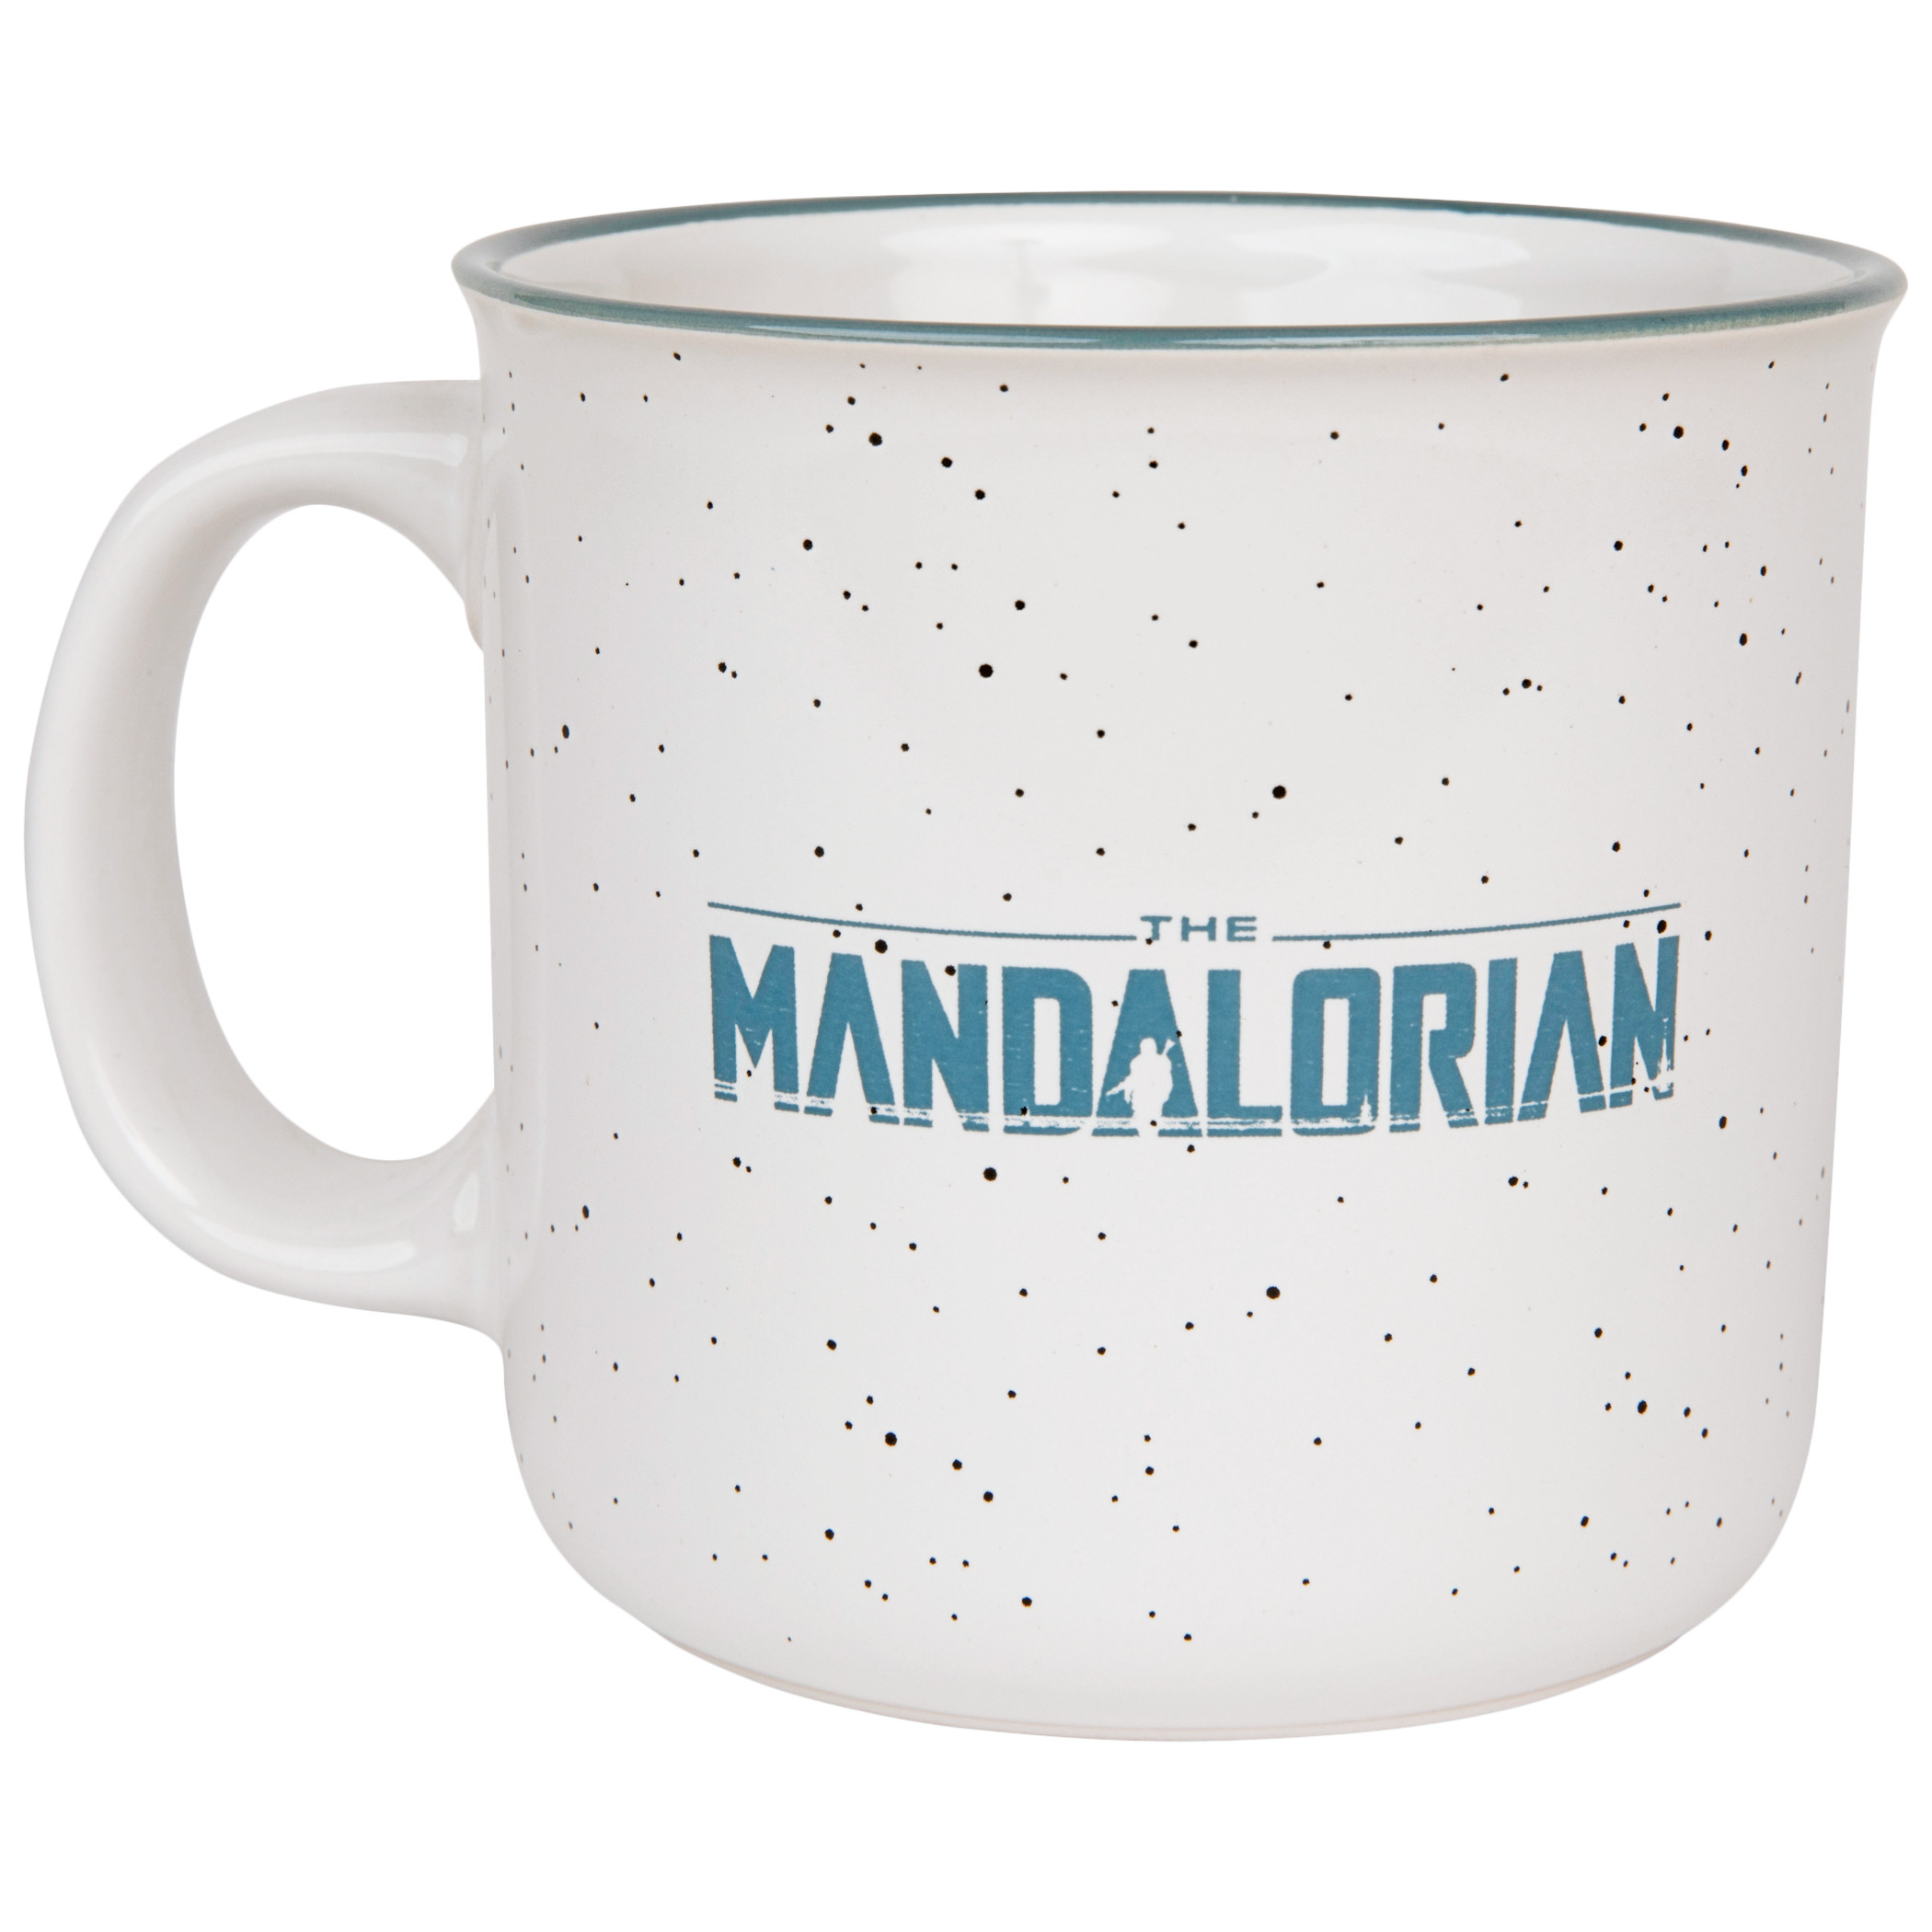 The Child Grogu Take Naps Coffee Mug 20 oz. - The Mandalorian